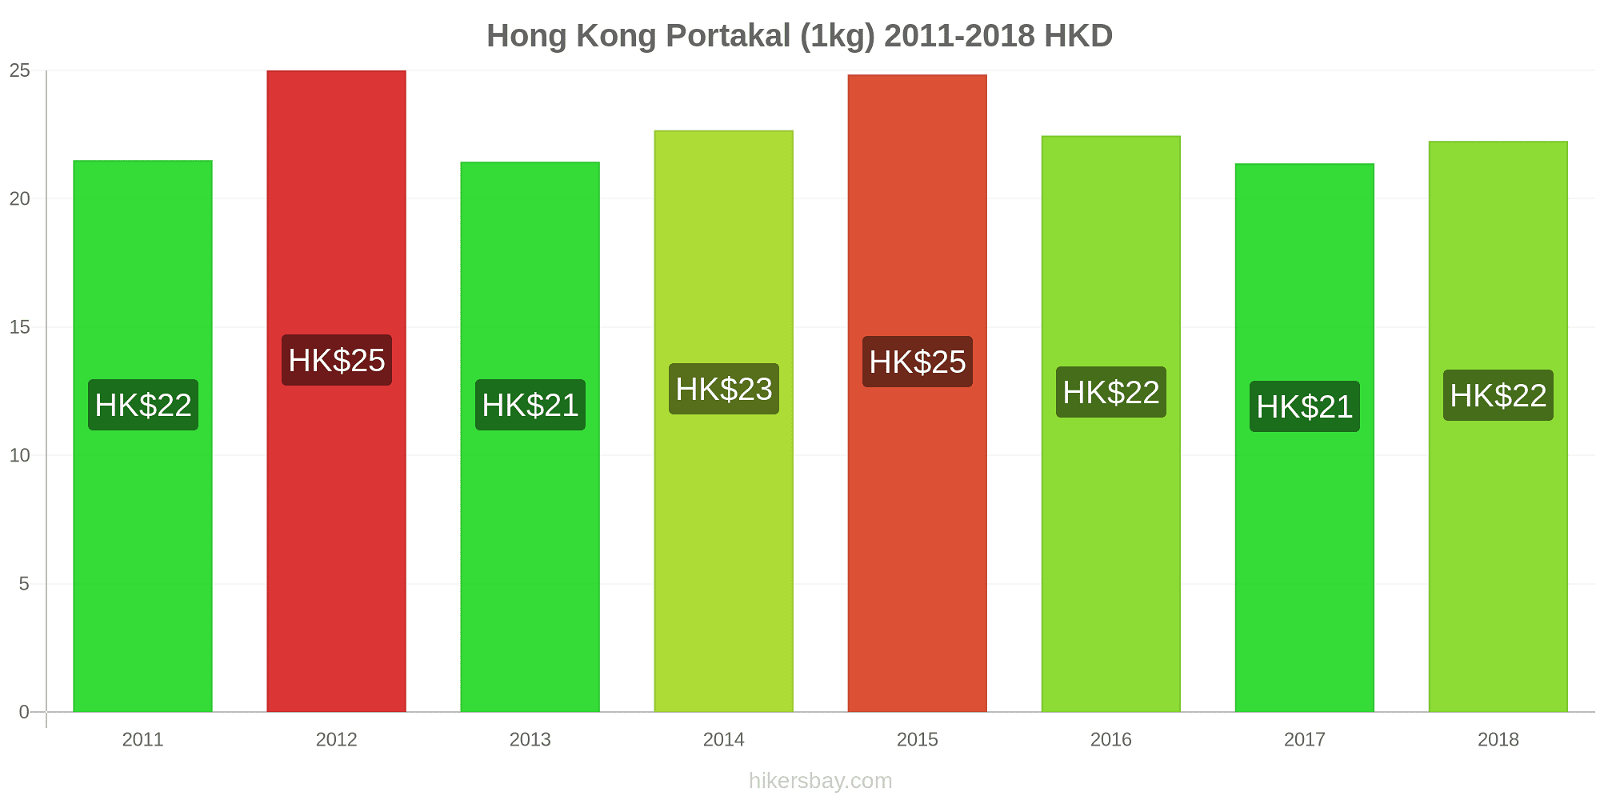 Hong Kong fiyat değişiklikleri Portakal (1kg) hikersbay.com